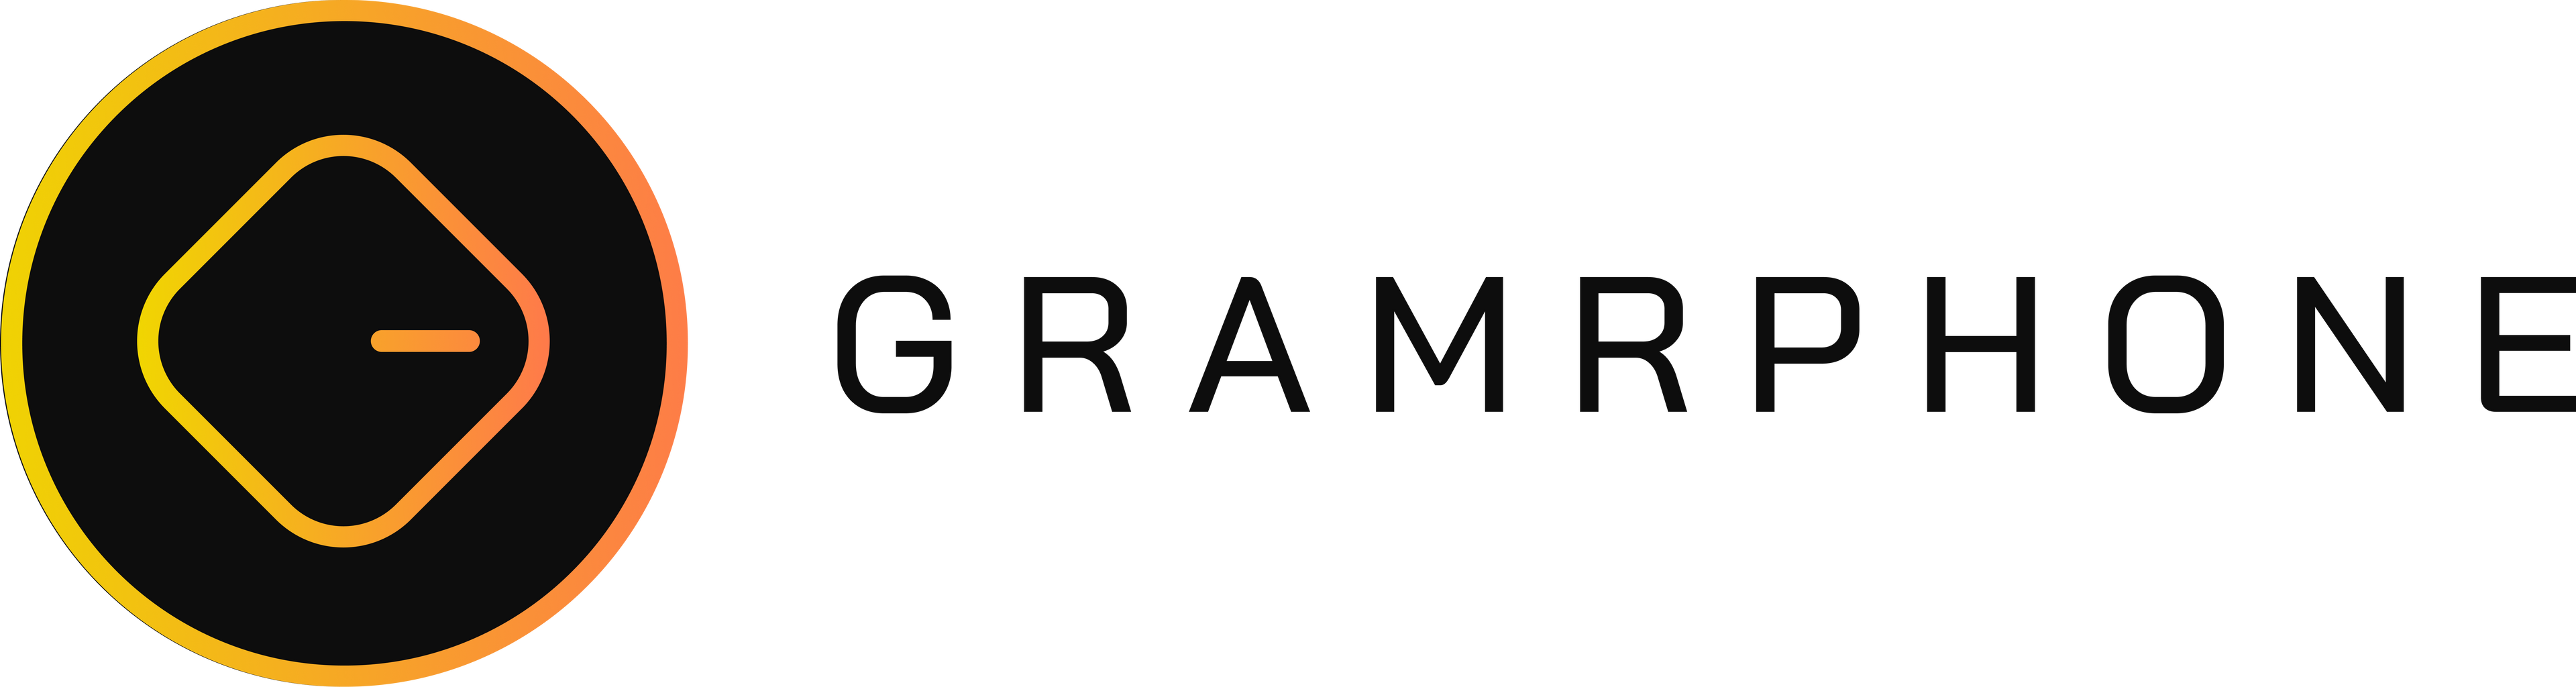 Gramrphone logo